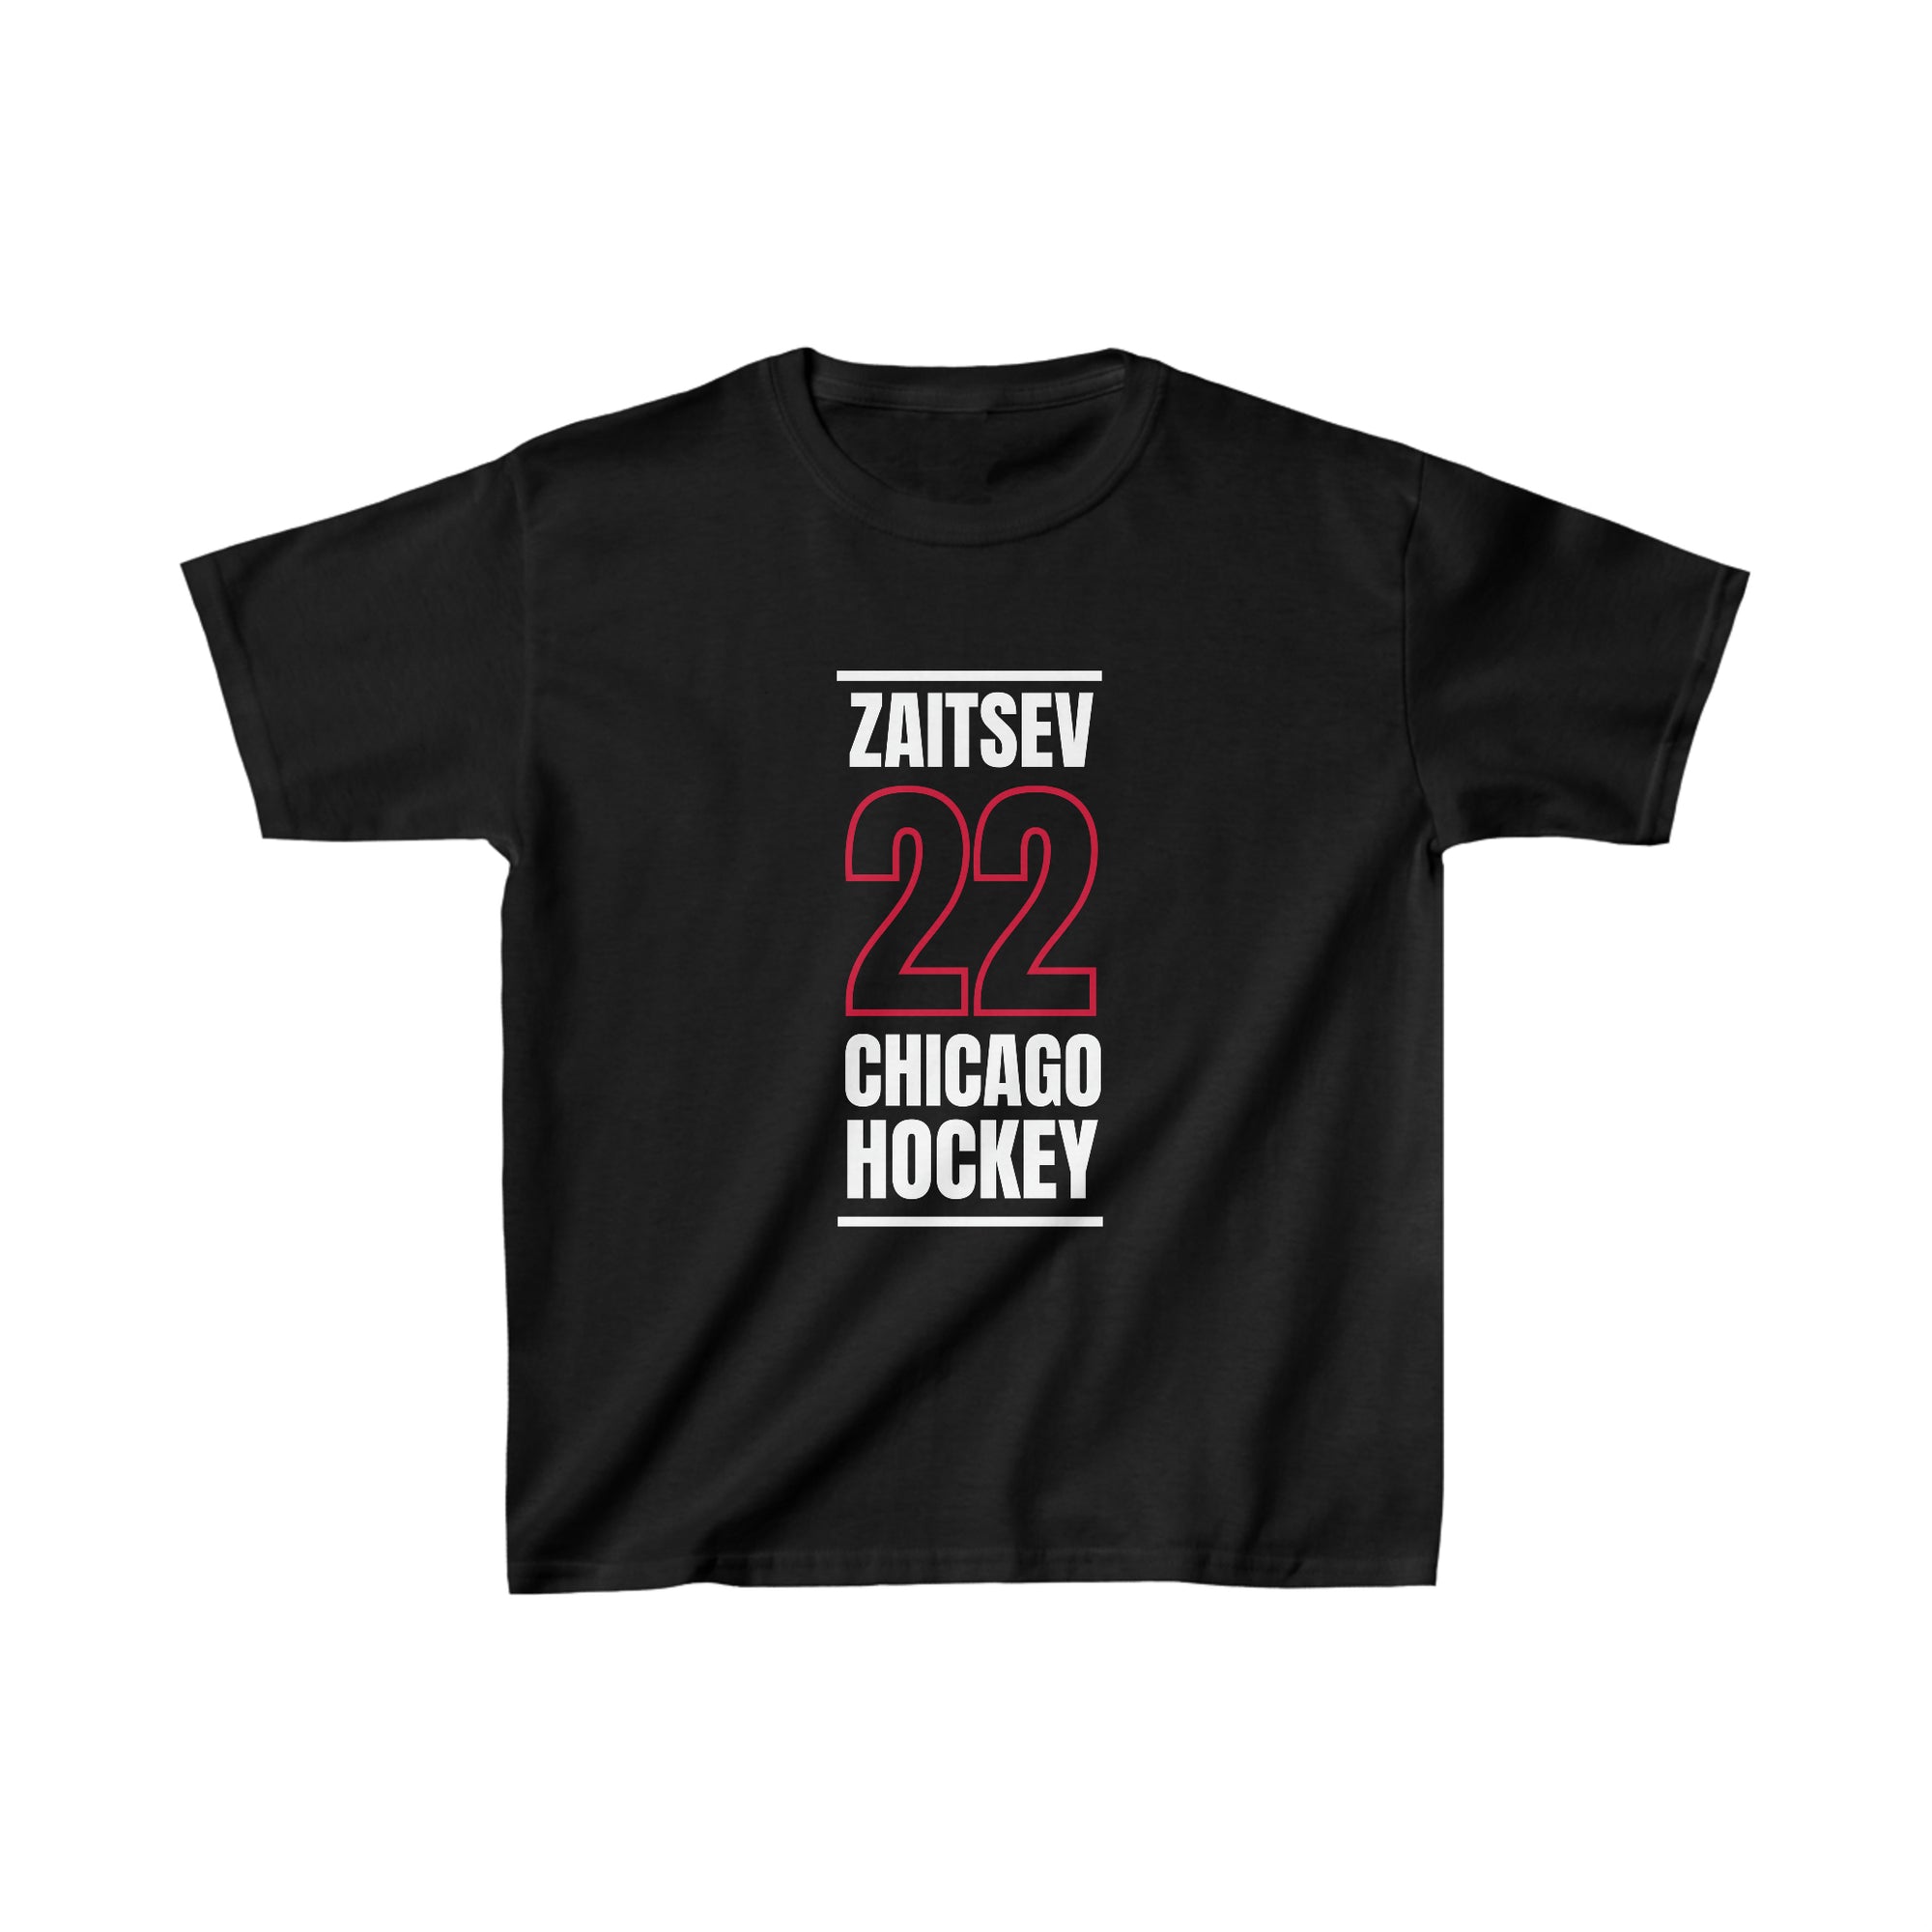 Zaitsev 22 Chicago Hockey Black Vertical Design Kids Tee